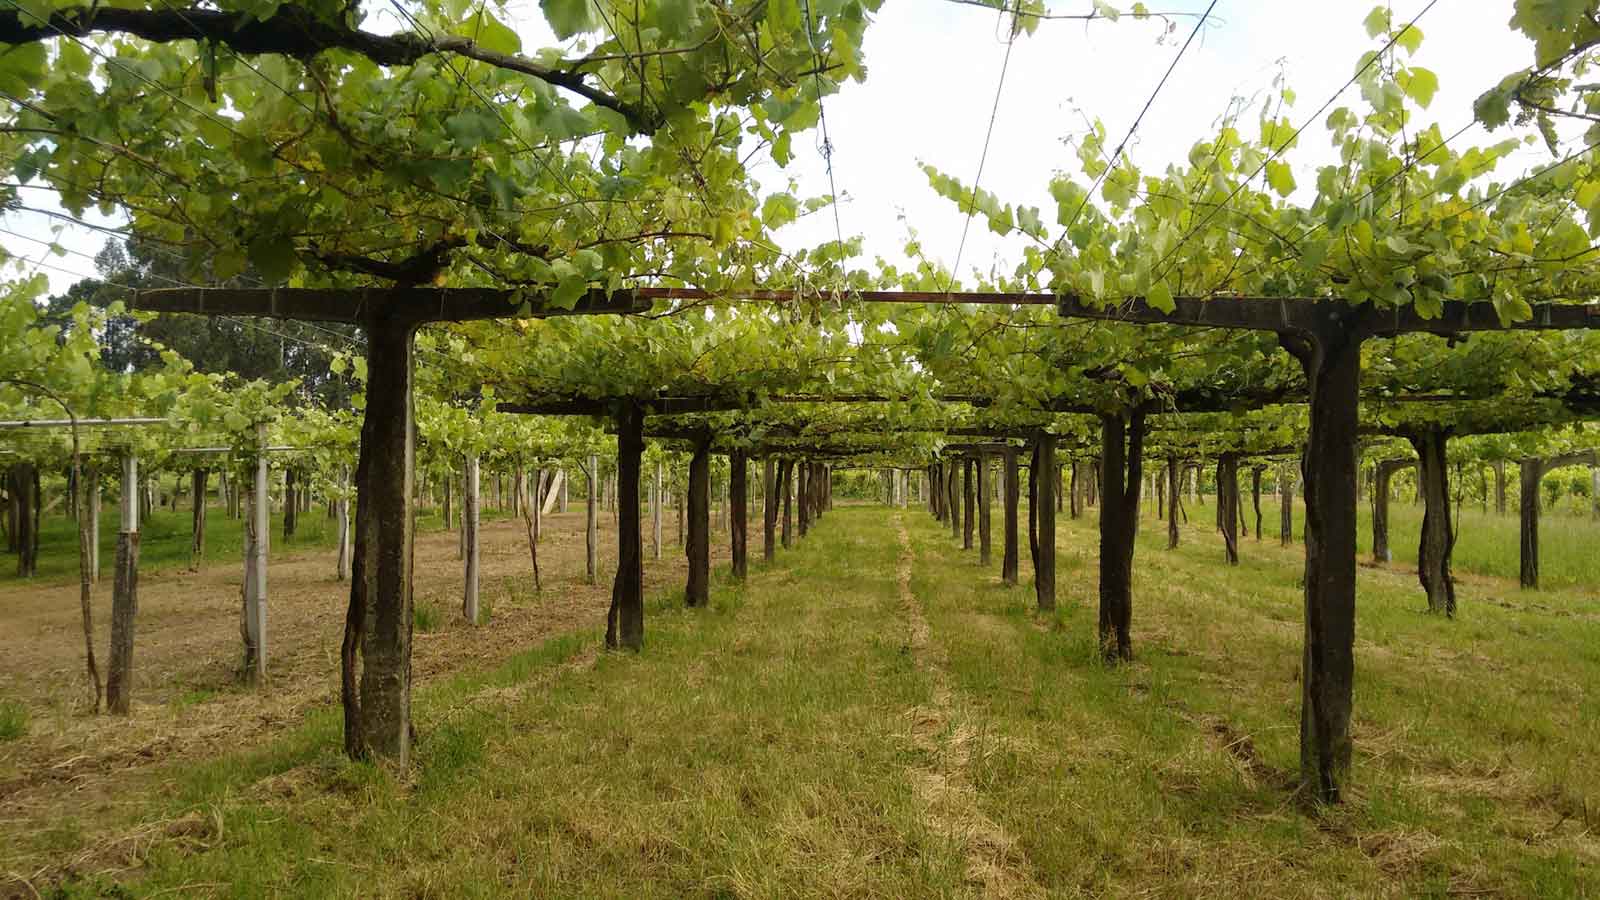 Albariño vines tied up on pergolas in the Spanish wine region of Rías Baixas